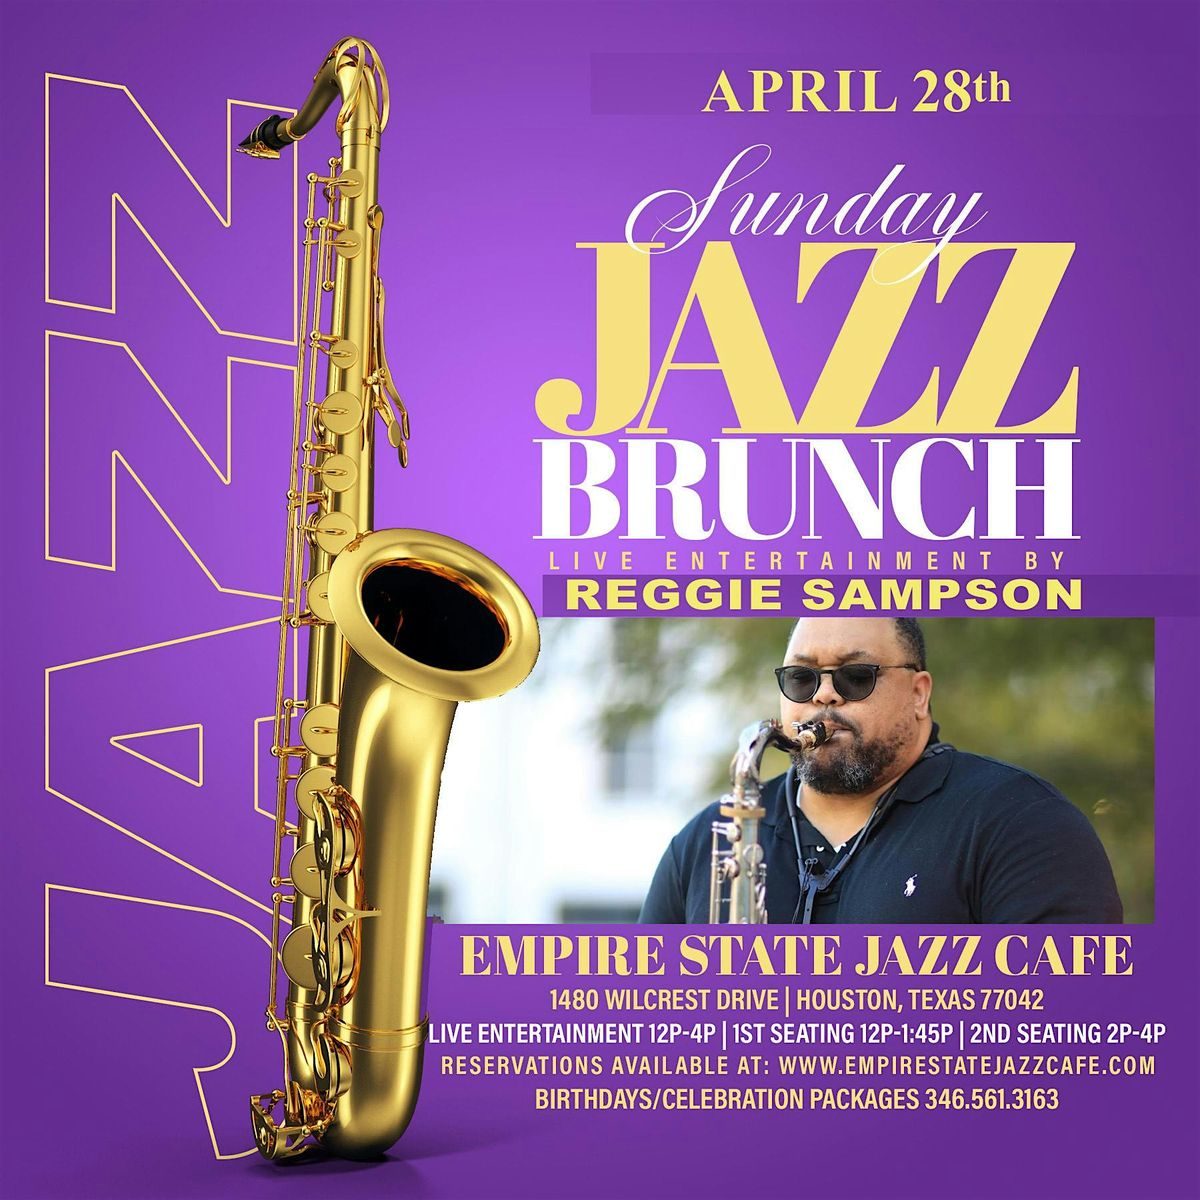 4\/28 - Sunday Jazz Brunch with Reggie Sampson